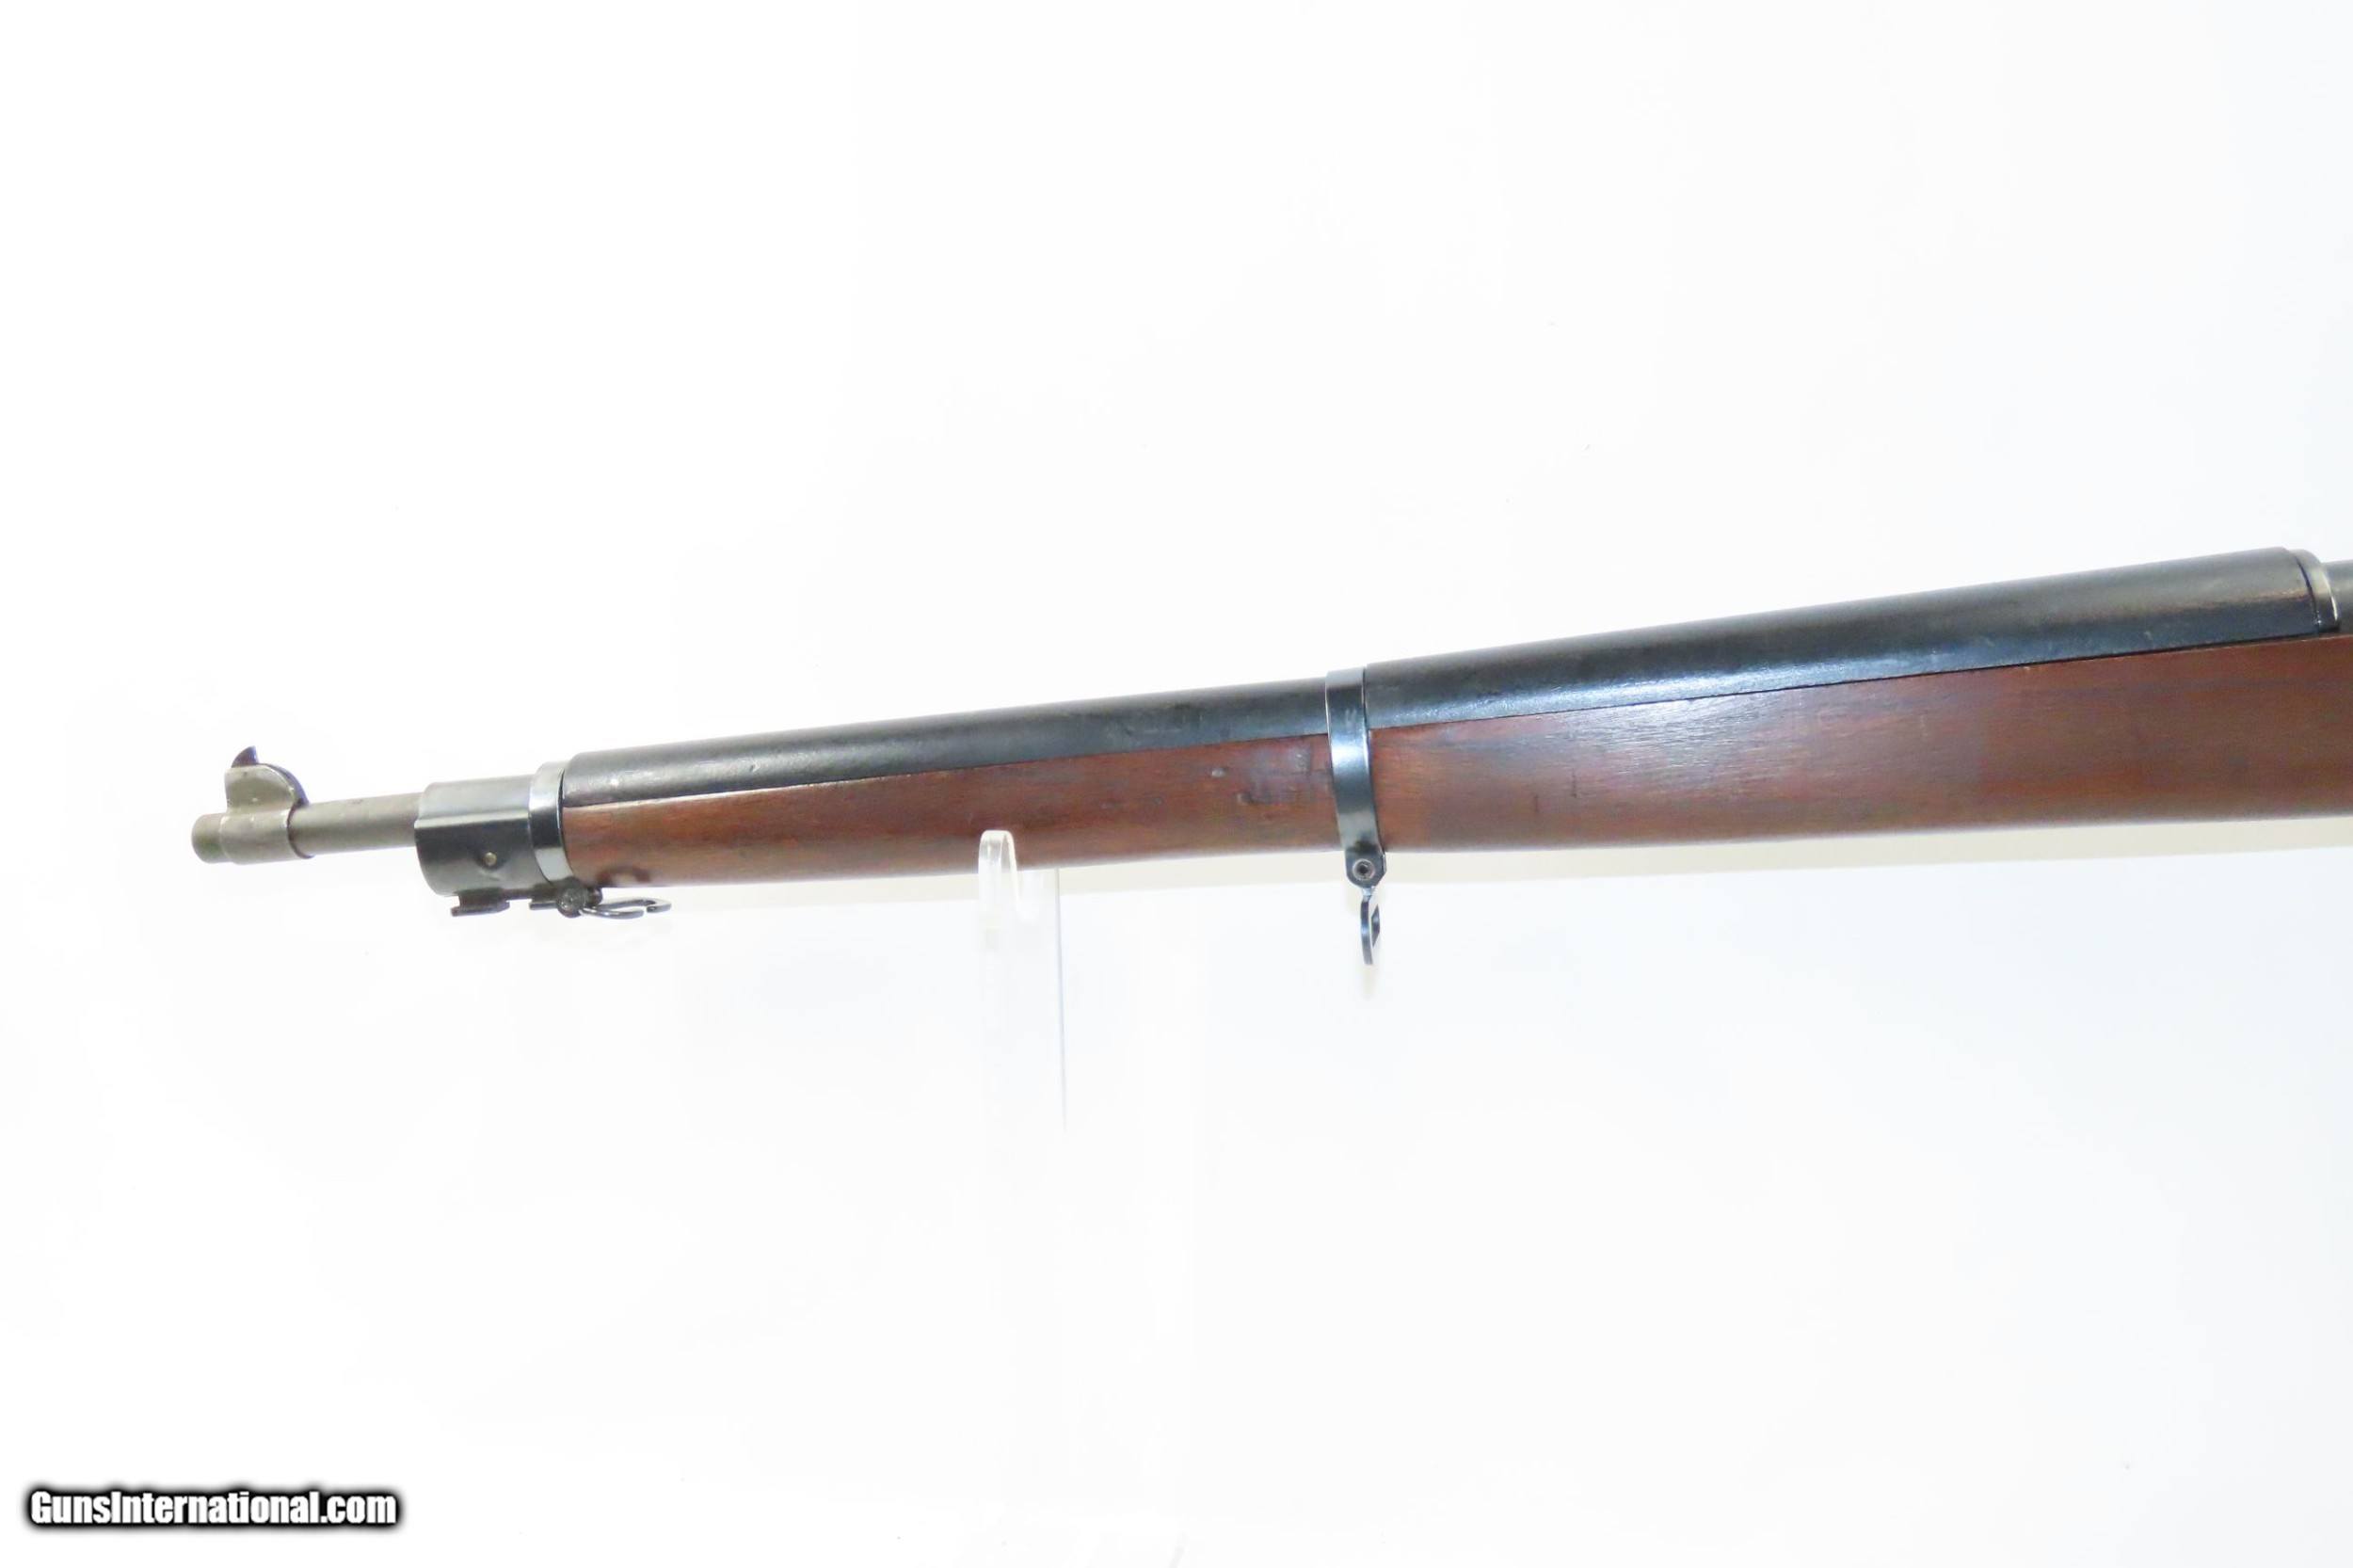 Centrefire bolt-action harpoon gun - Jarmann M/87 - about 1910